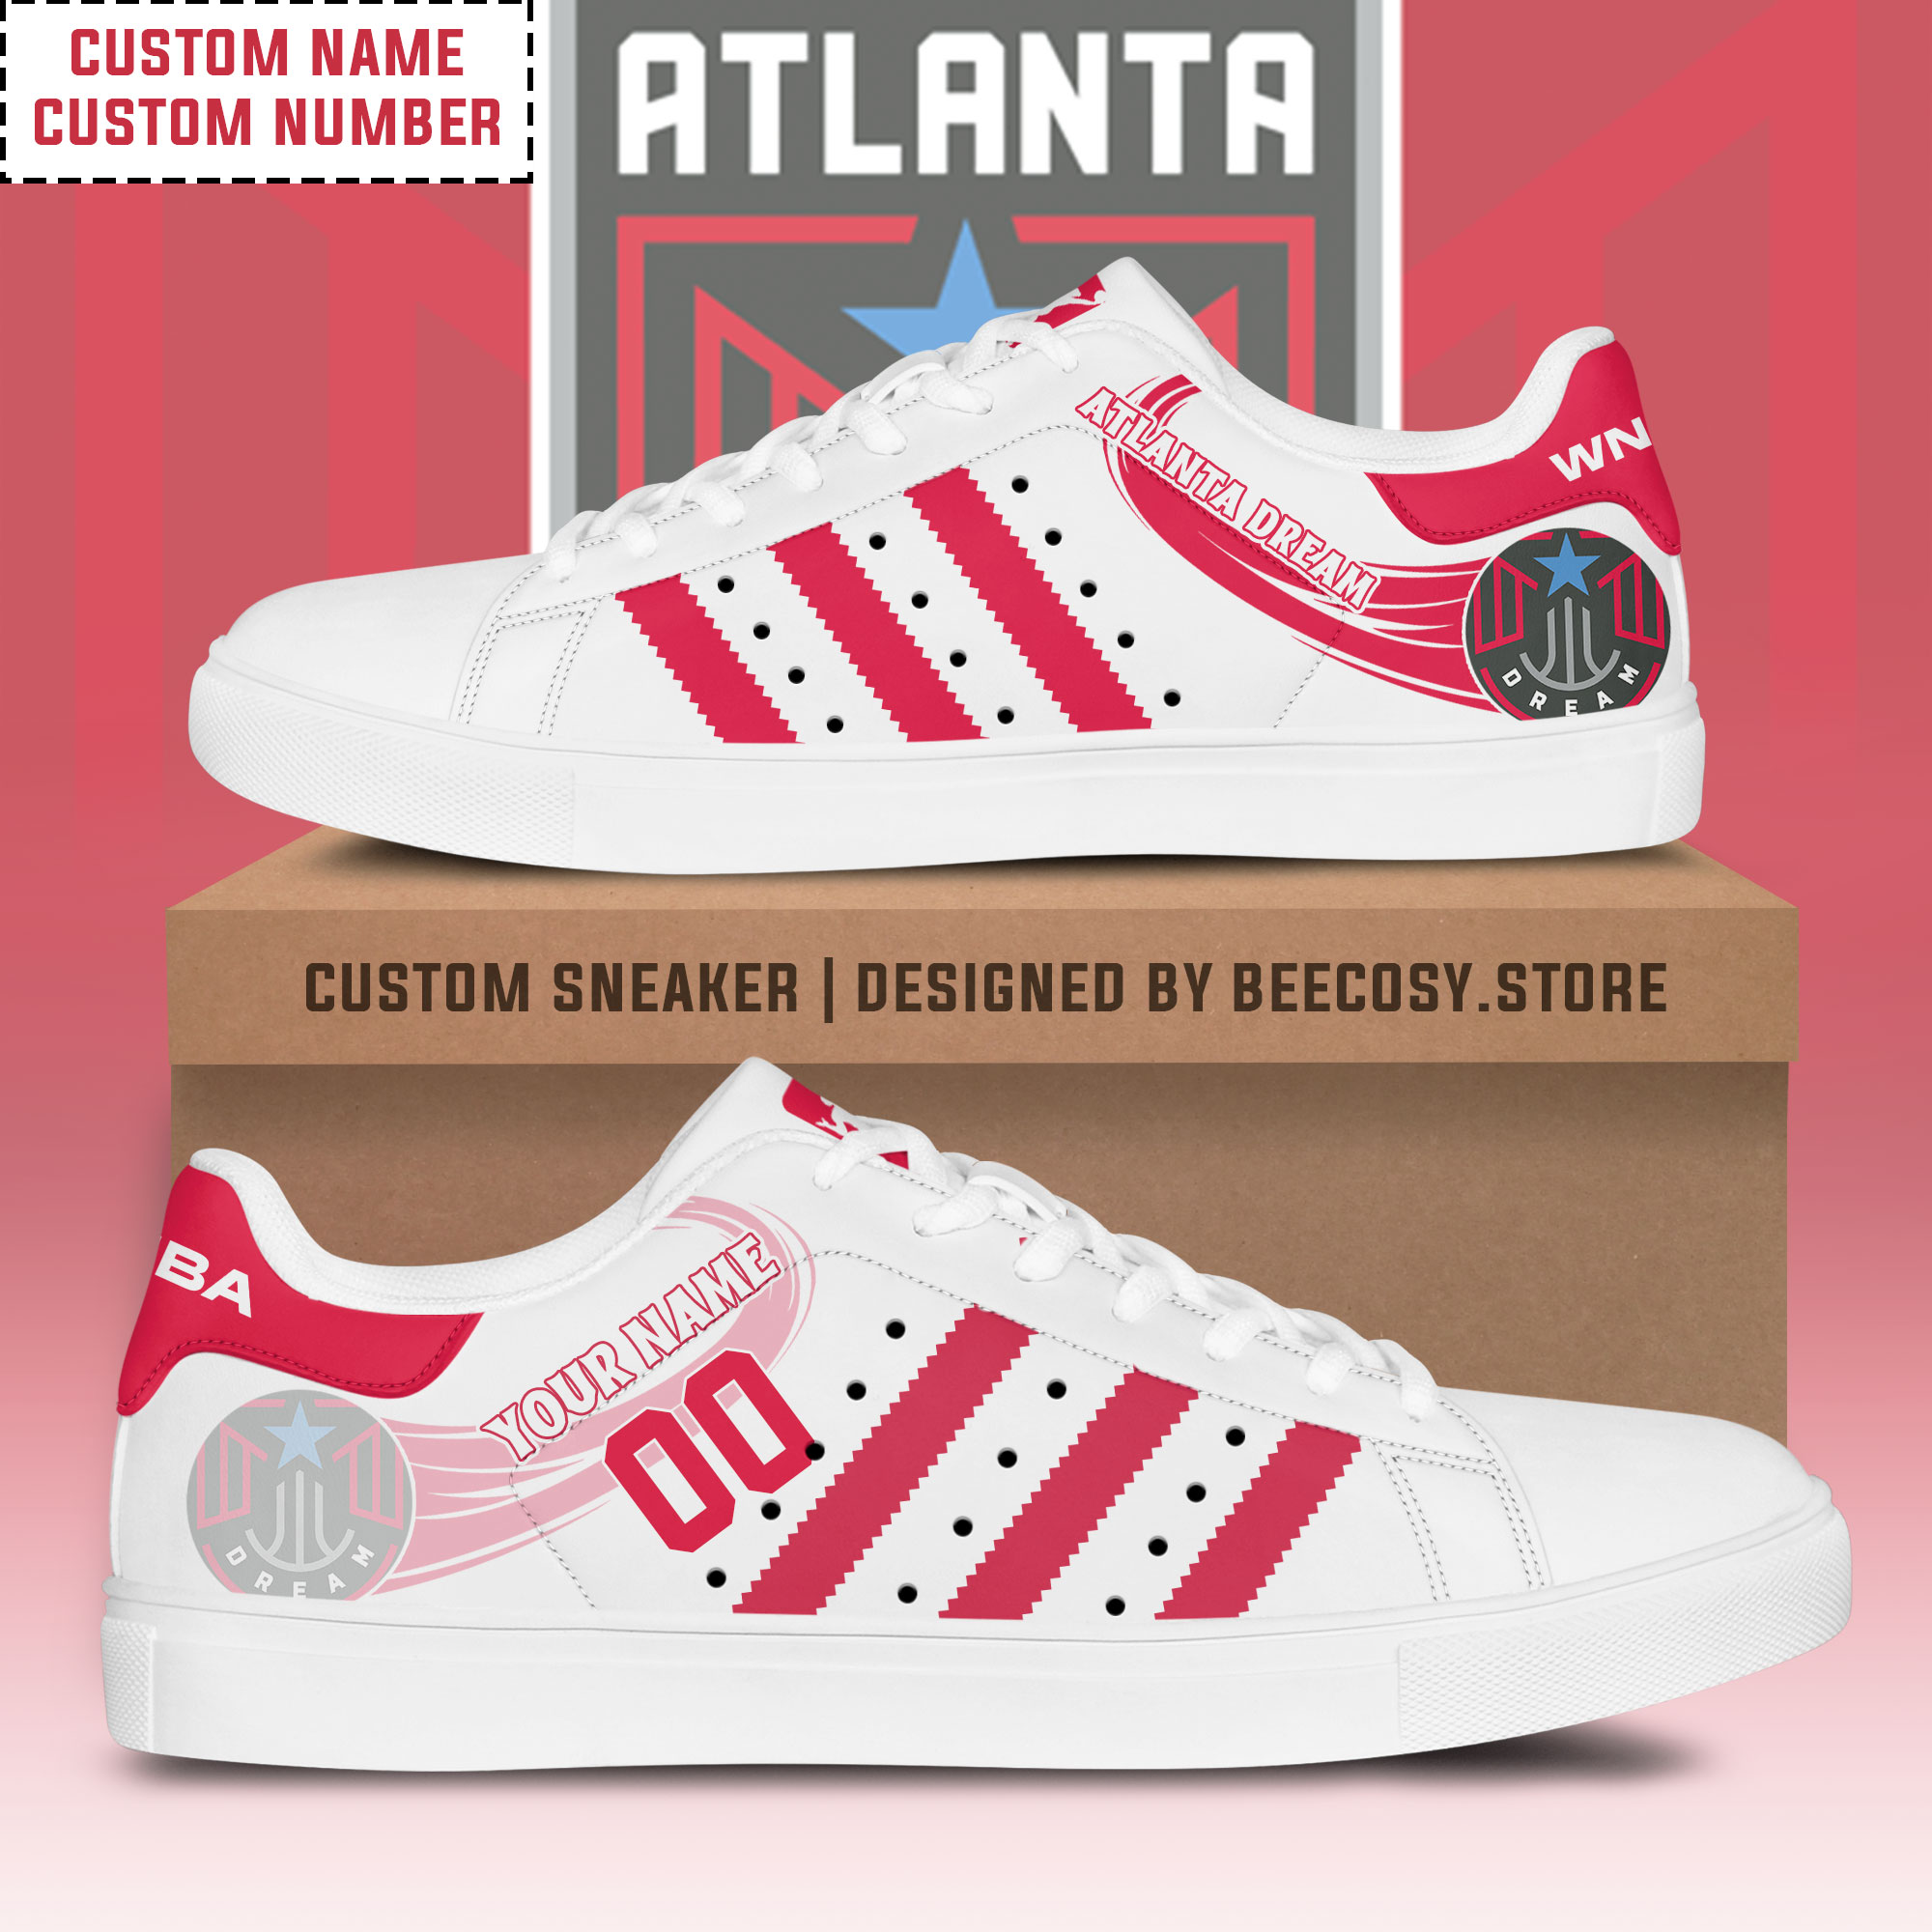 Atlanta Dream trang on box tyrqs.jpg